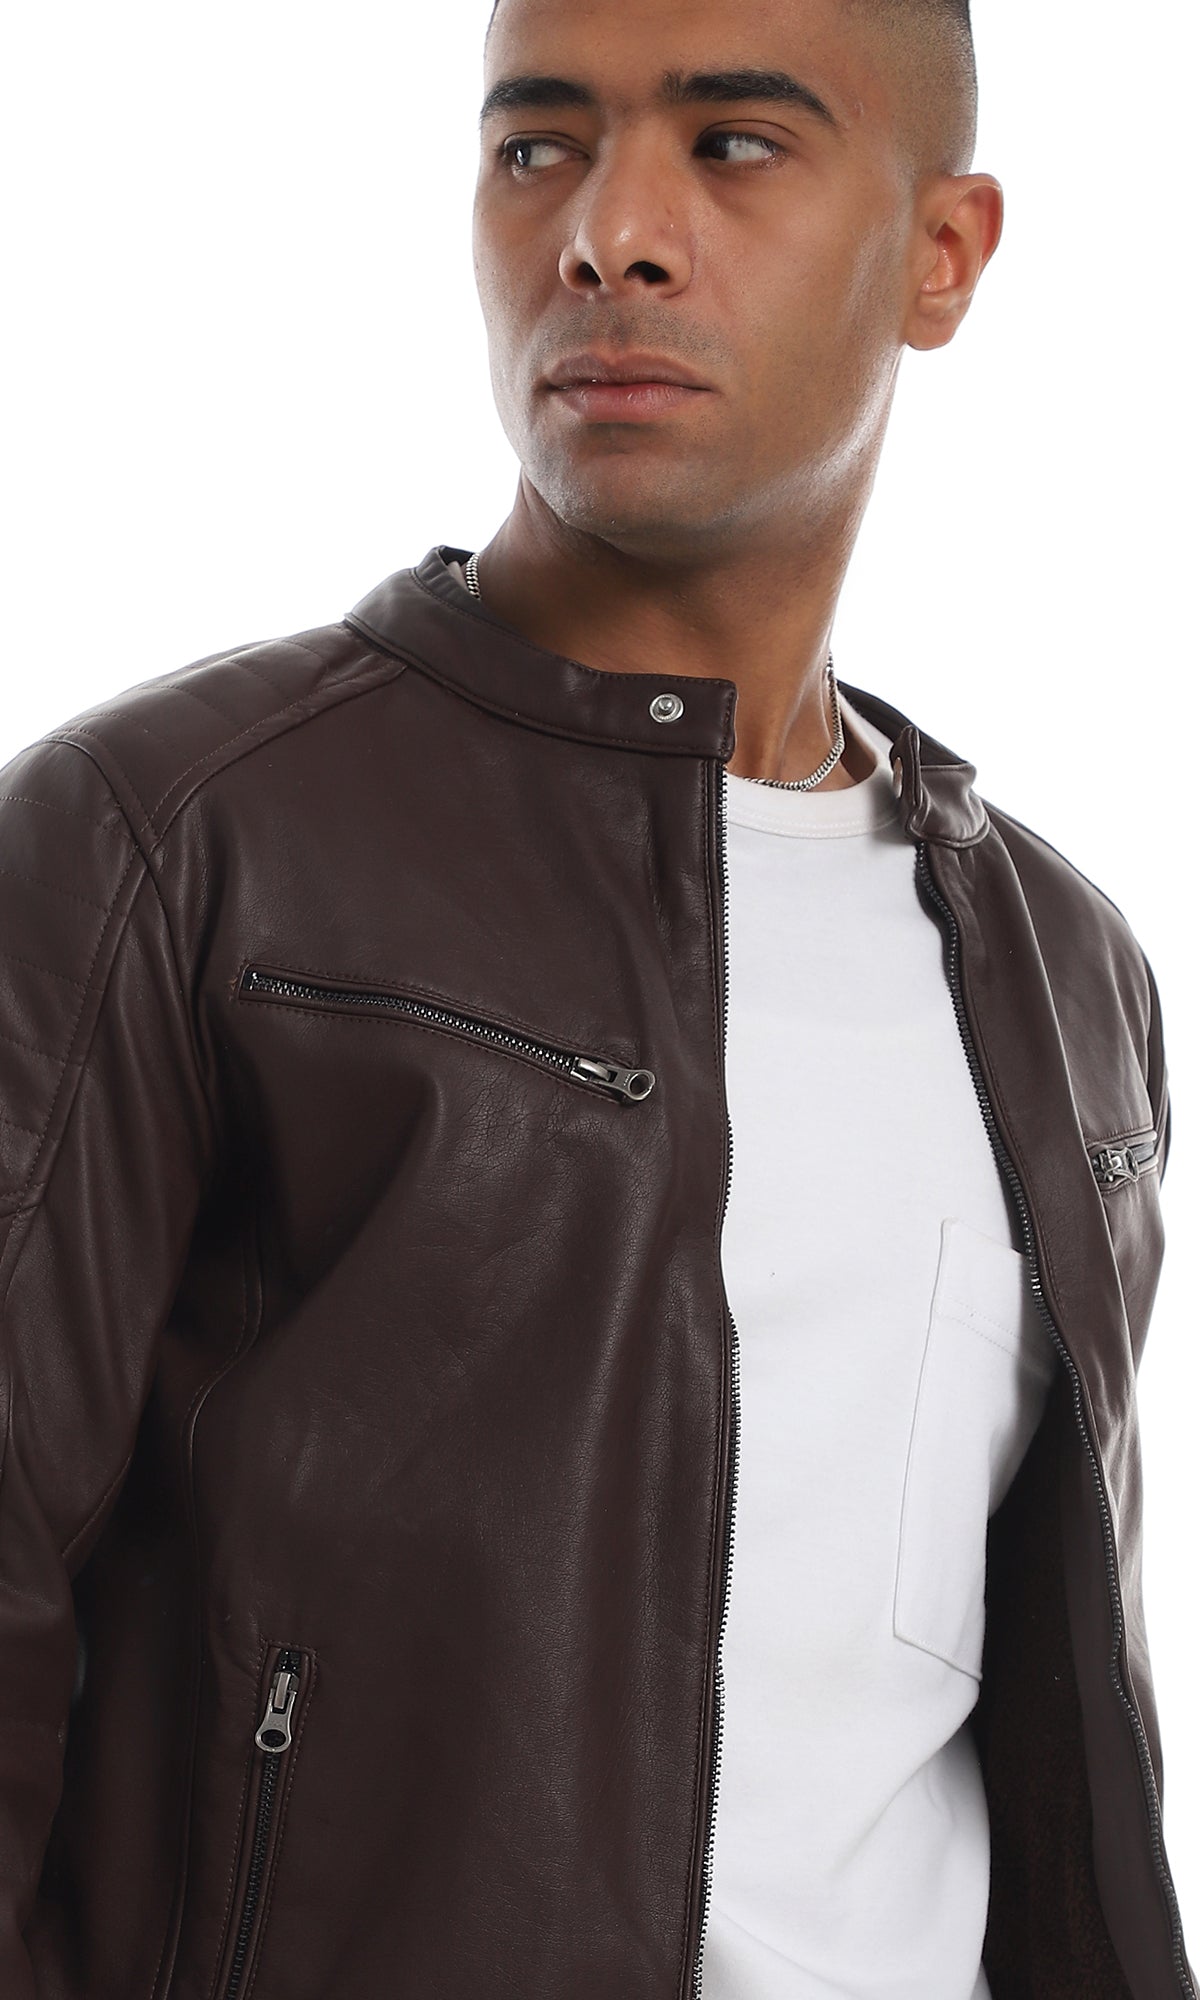 O156163 Internal Fur Band Neck Maroon Leather Jacket